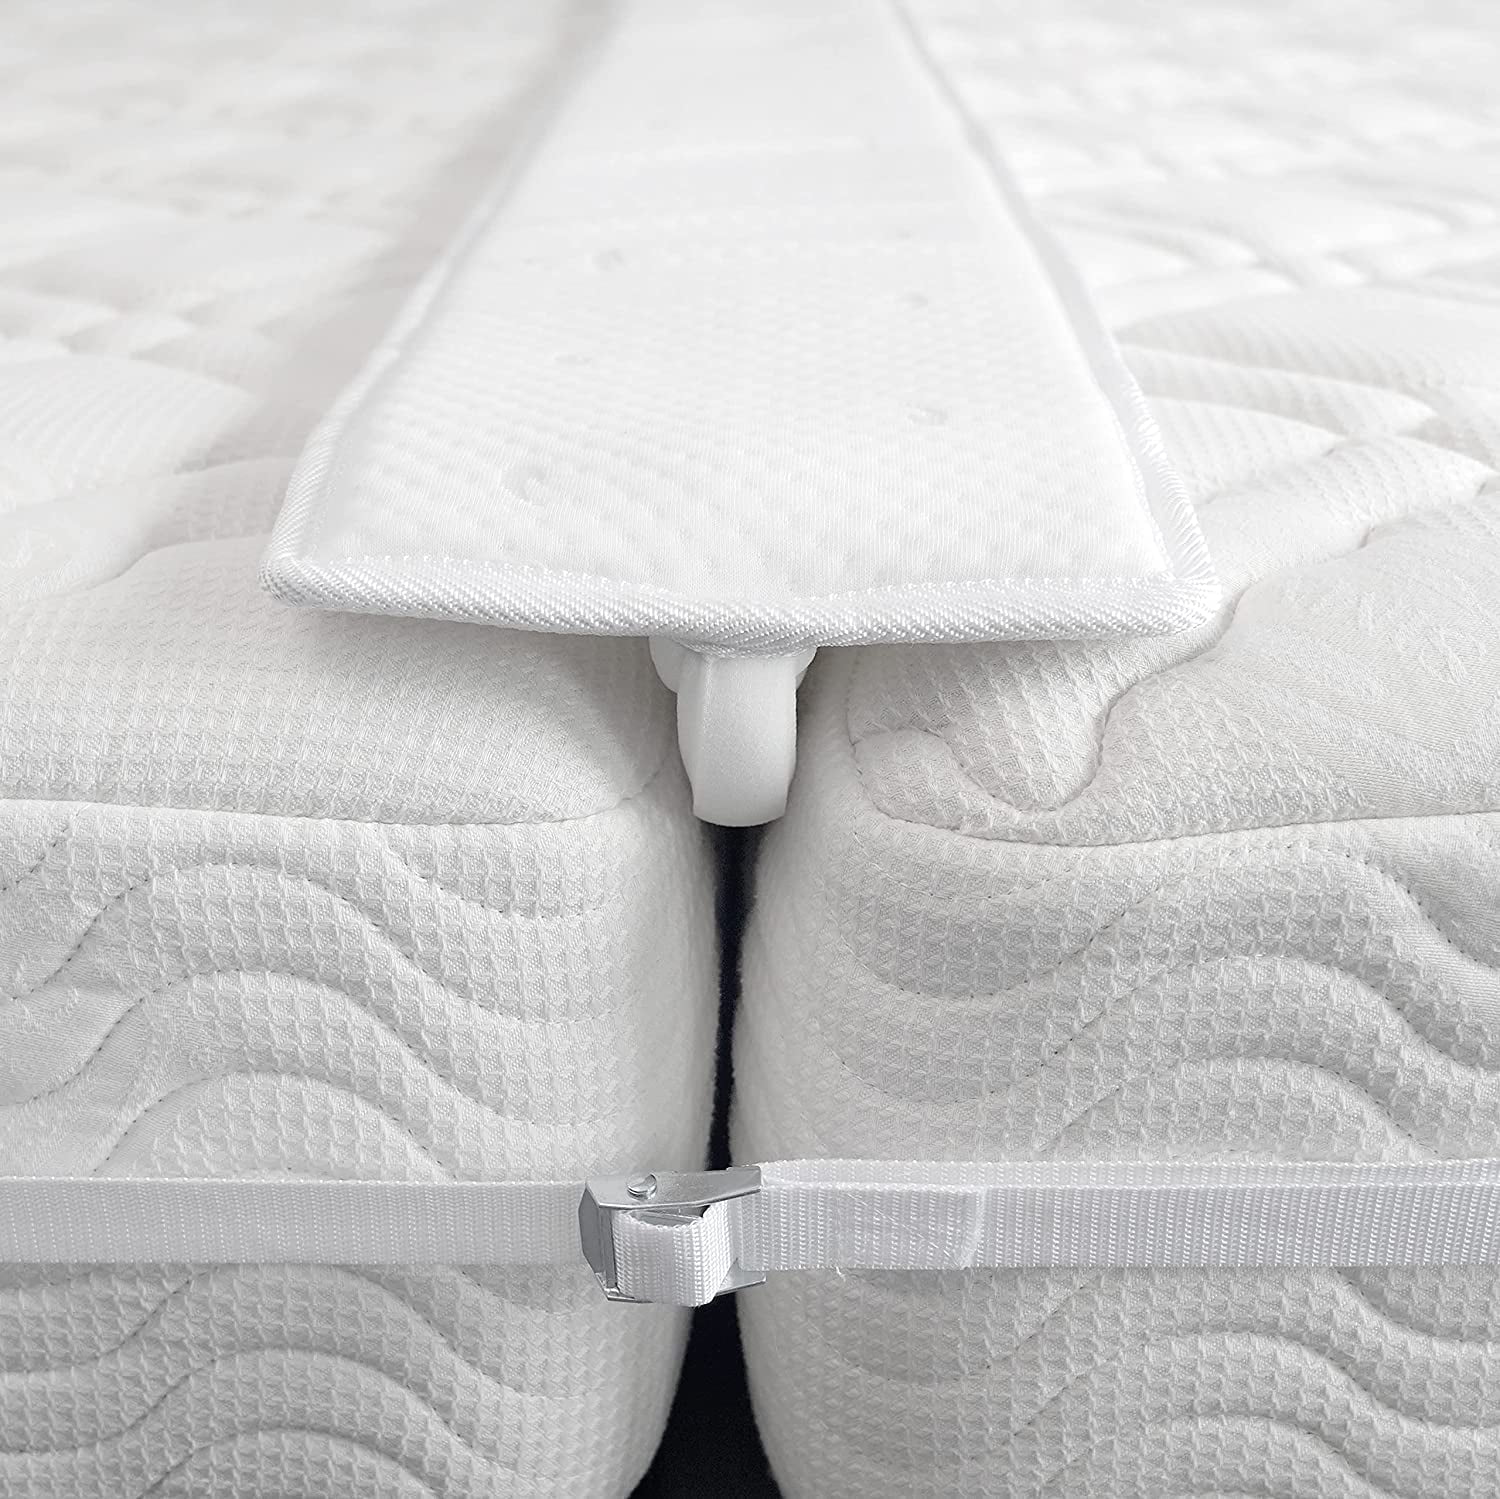 SmarTopus Bed Bridge Twin to King Converter Kit, Hypoallergenic Mattress Cover, White, 6.5 x 6.6